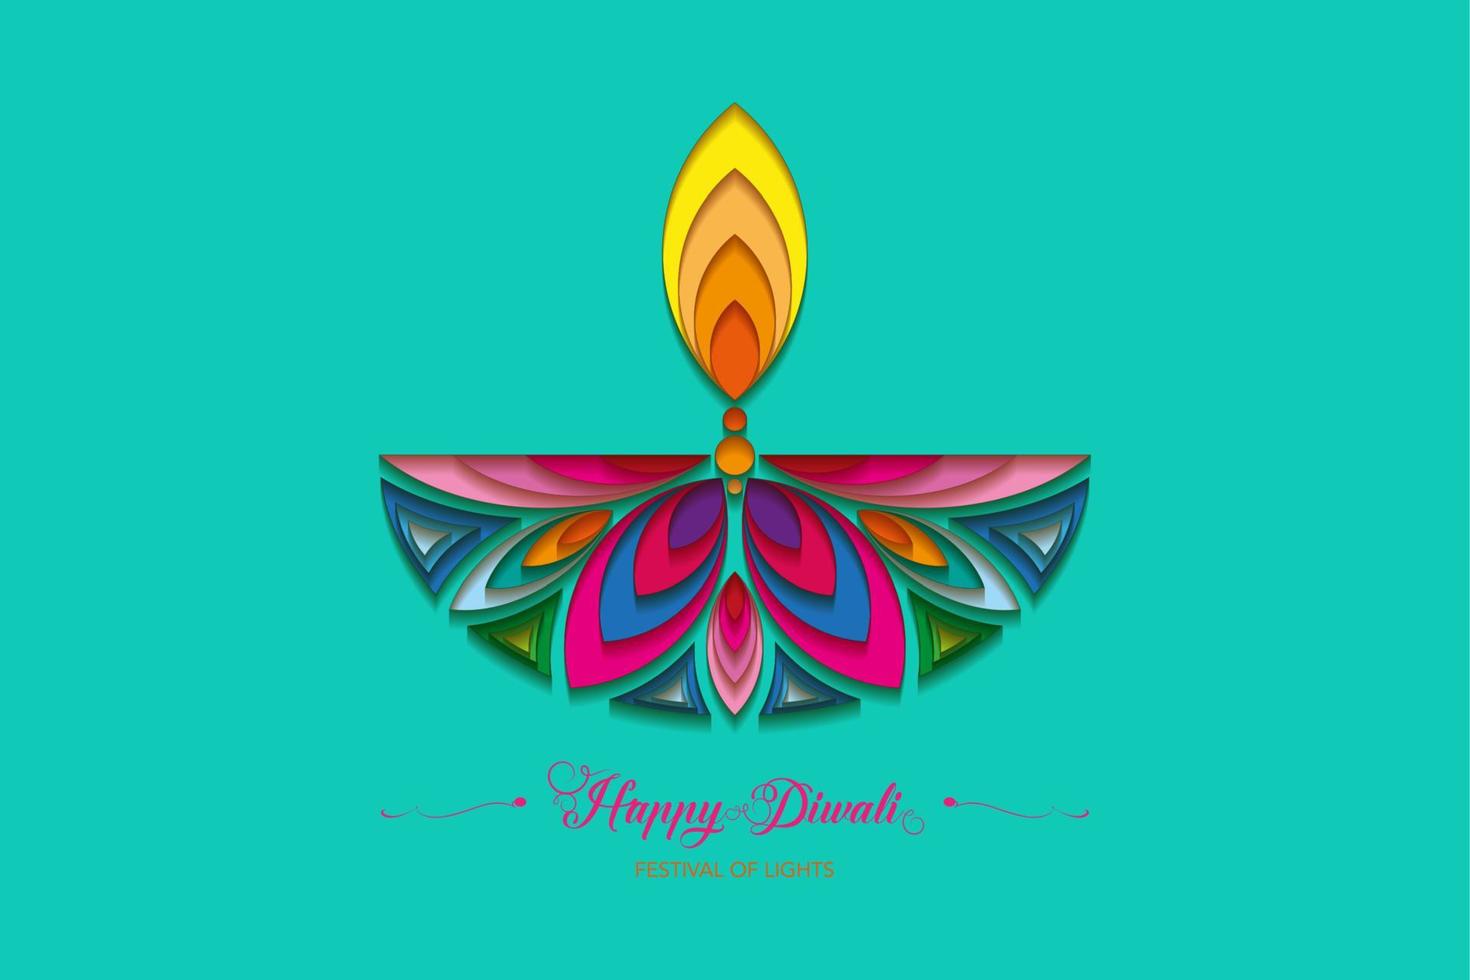 feliz diwali festival de luces india celebración colorida plantilla de logotipo. diseño gráfico de pancartas de lámpara de aceite diya de flores indias, diseño moderno en colores vibrantes. vector aislado sobre fondo verde